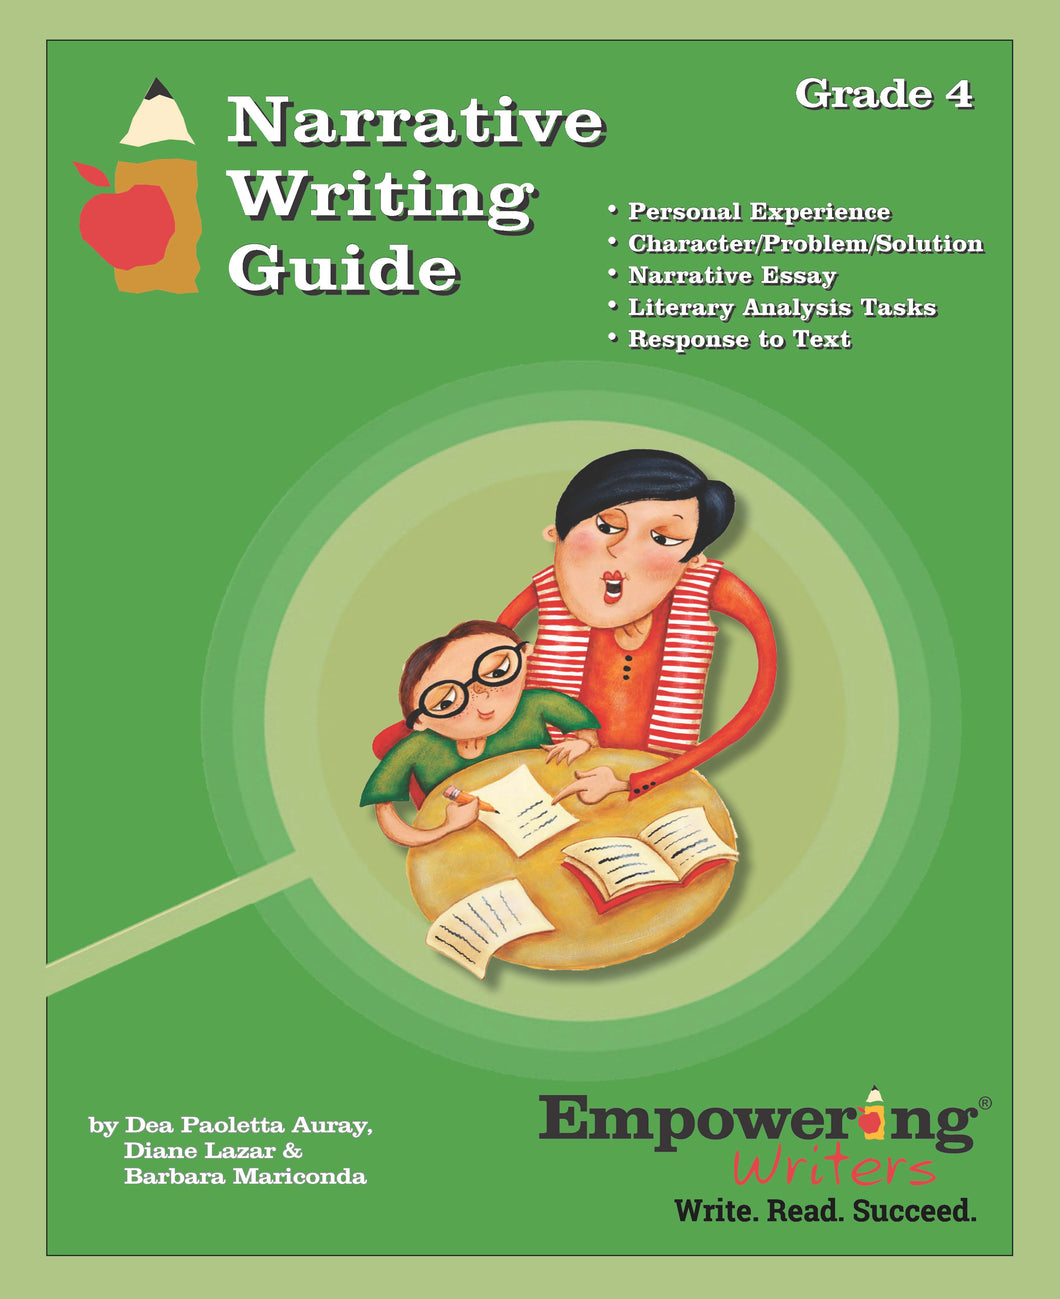 Grade 4 Narrative Writing Guide (printed) - U.S.